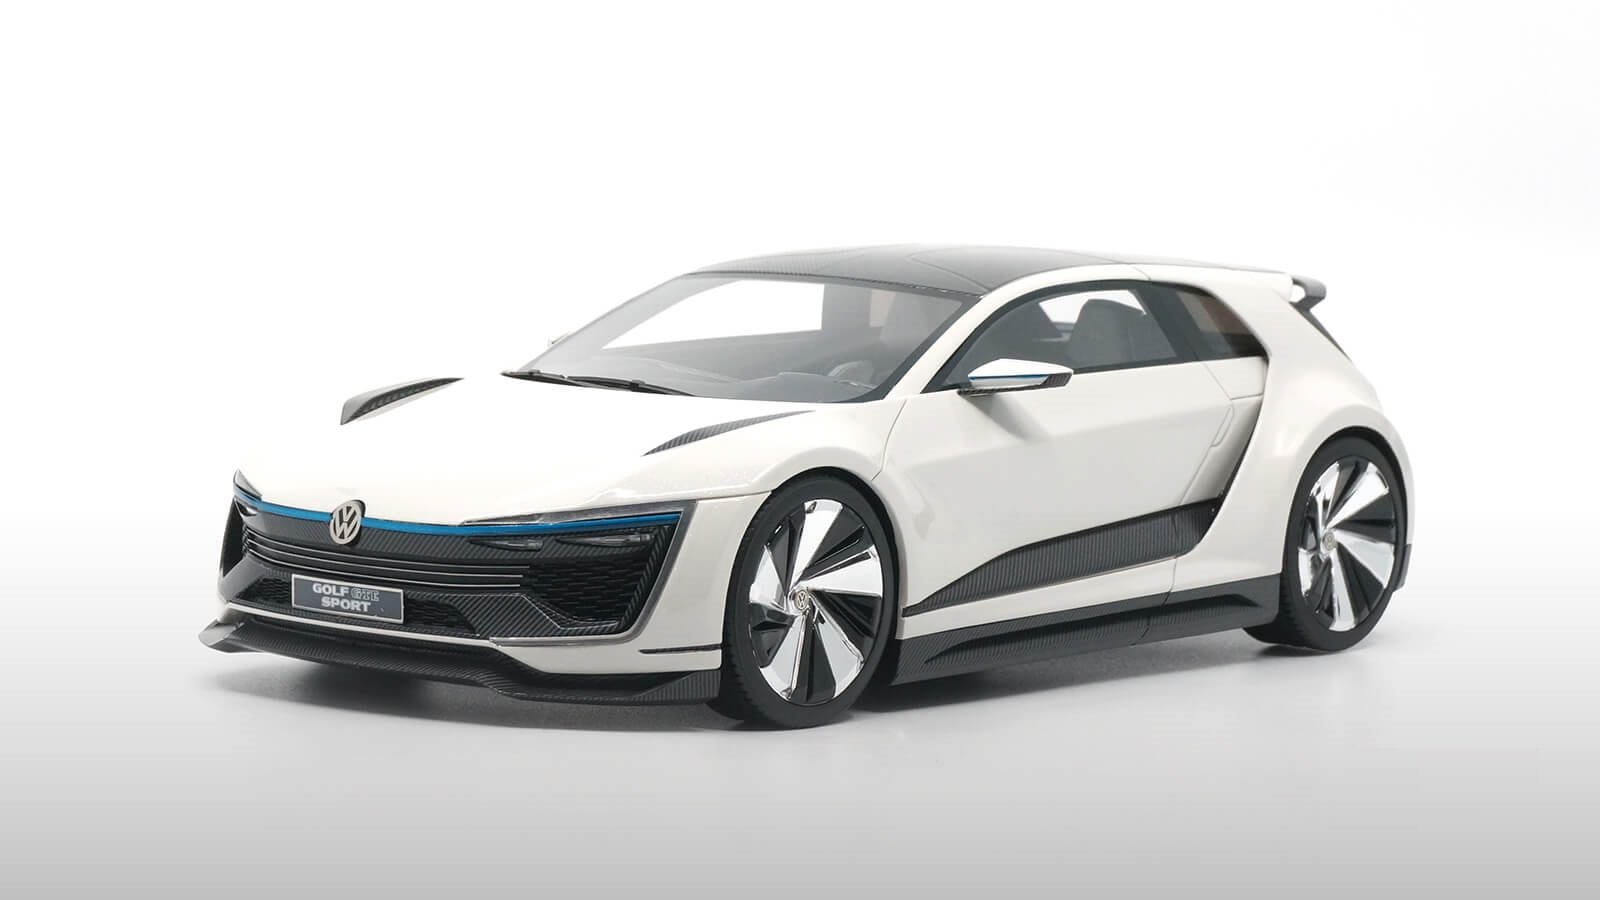 verbannen aangrenzend Mysterie Volkswagen Golf GTE Sport Concept | Schaalmodel 1-18 |DNA Collectibles